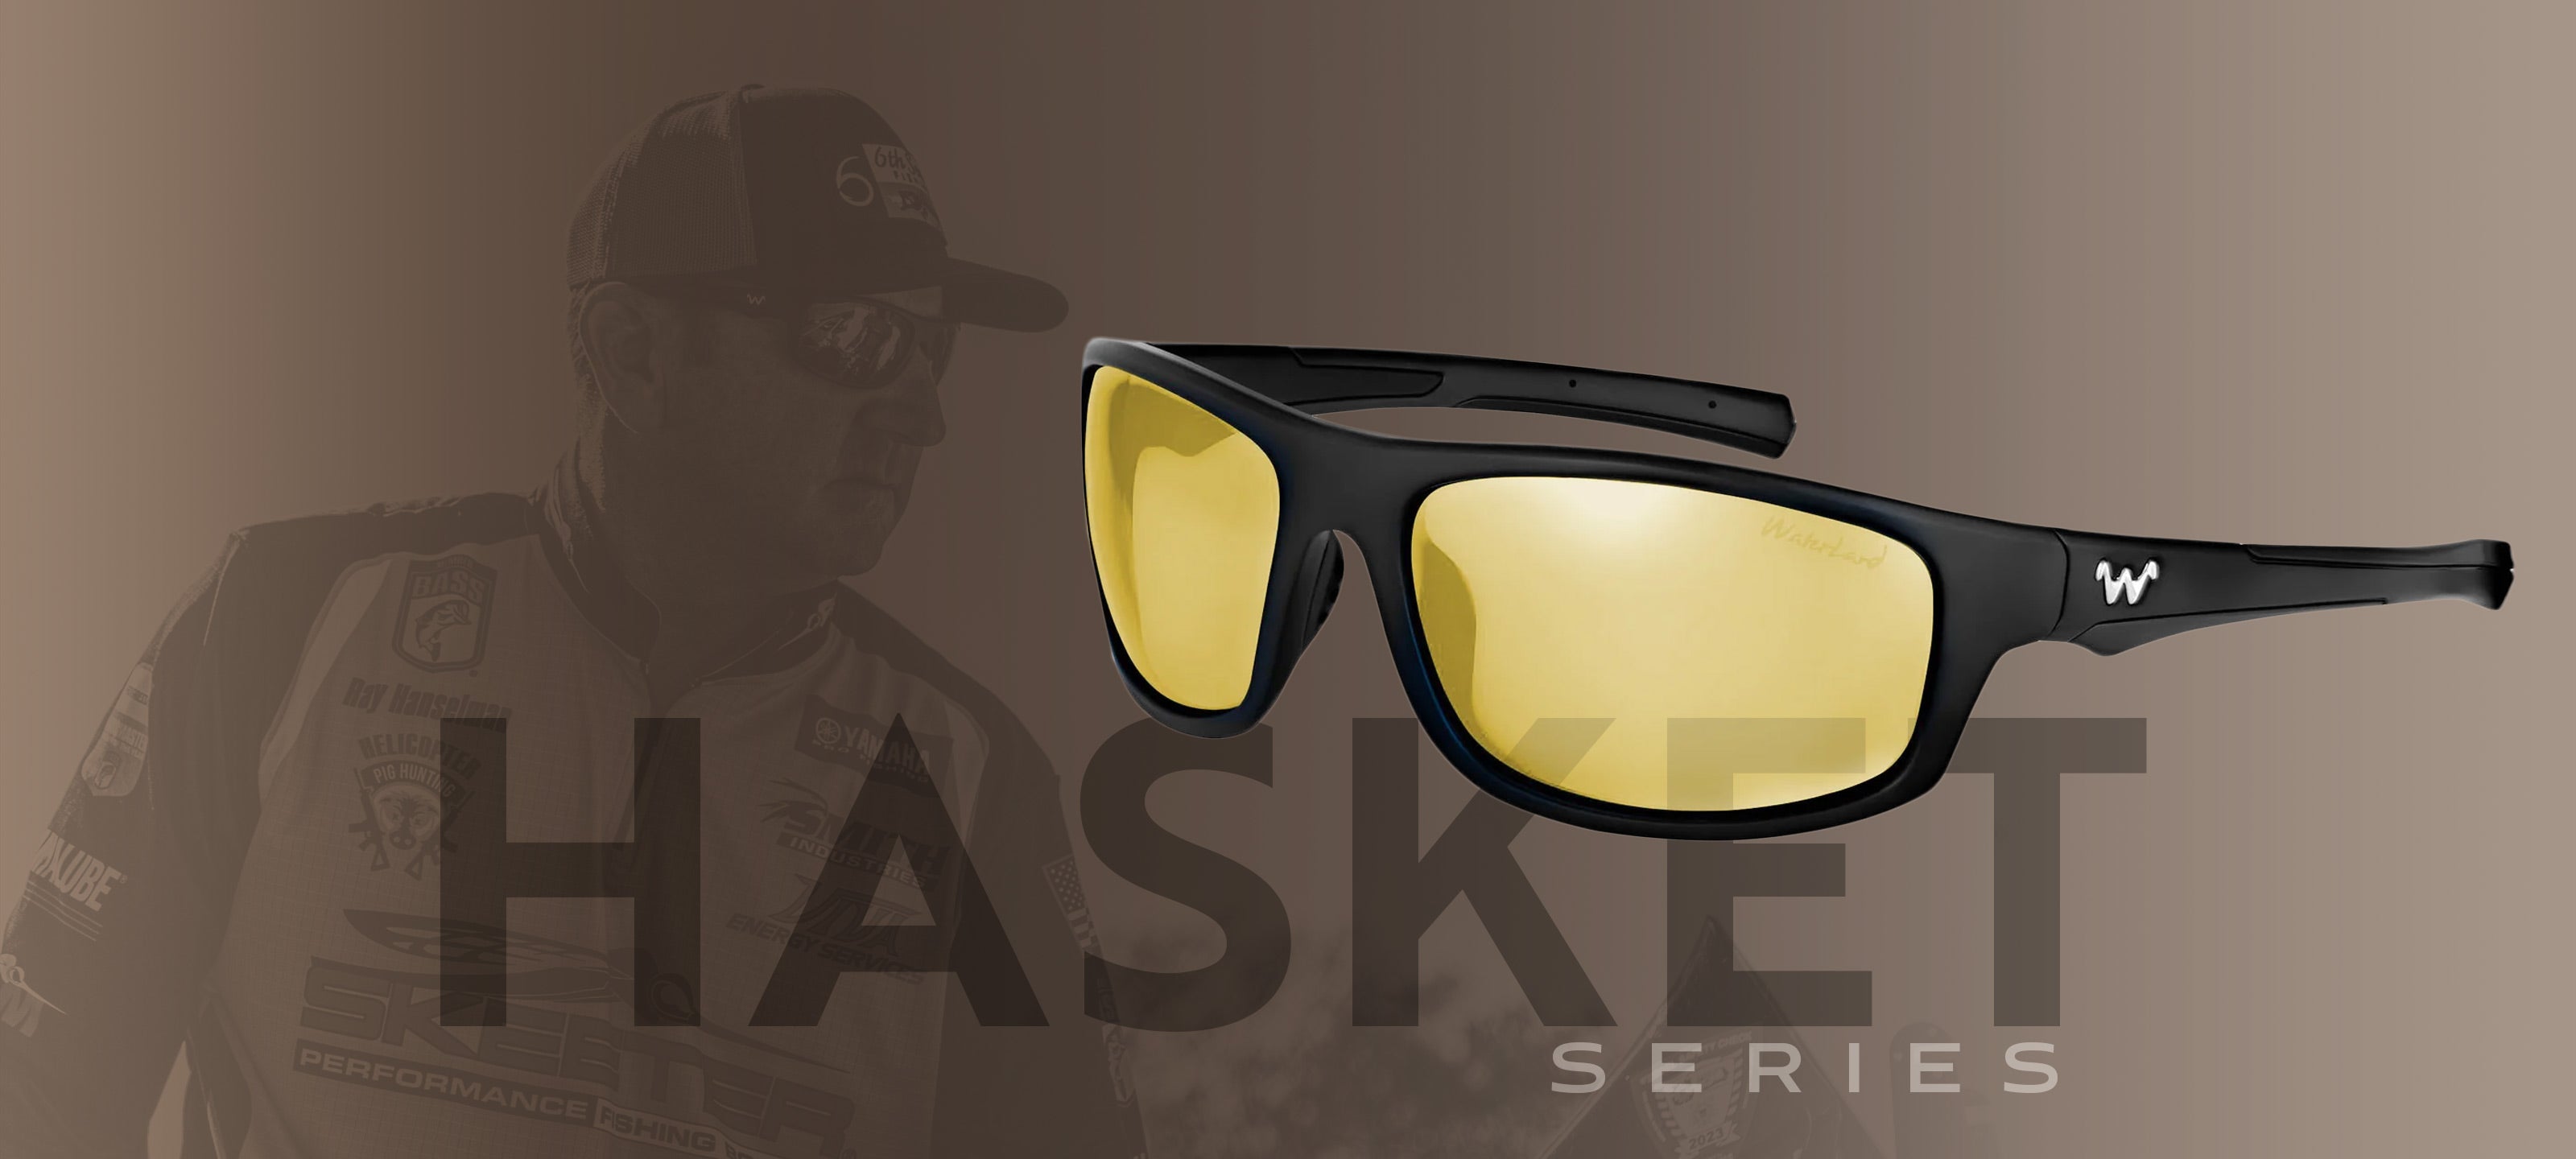 6th Sense Fishing - Sunglasses - Hasket Series